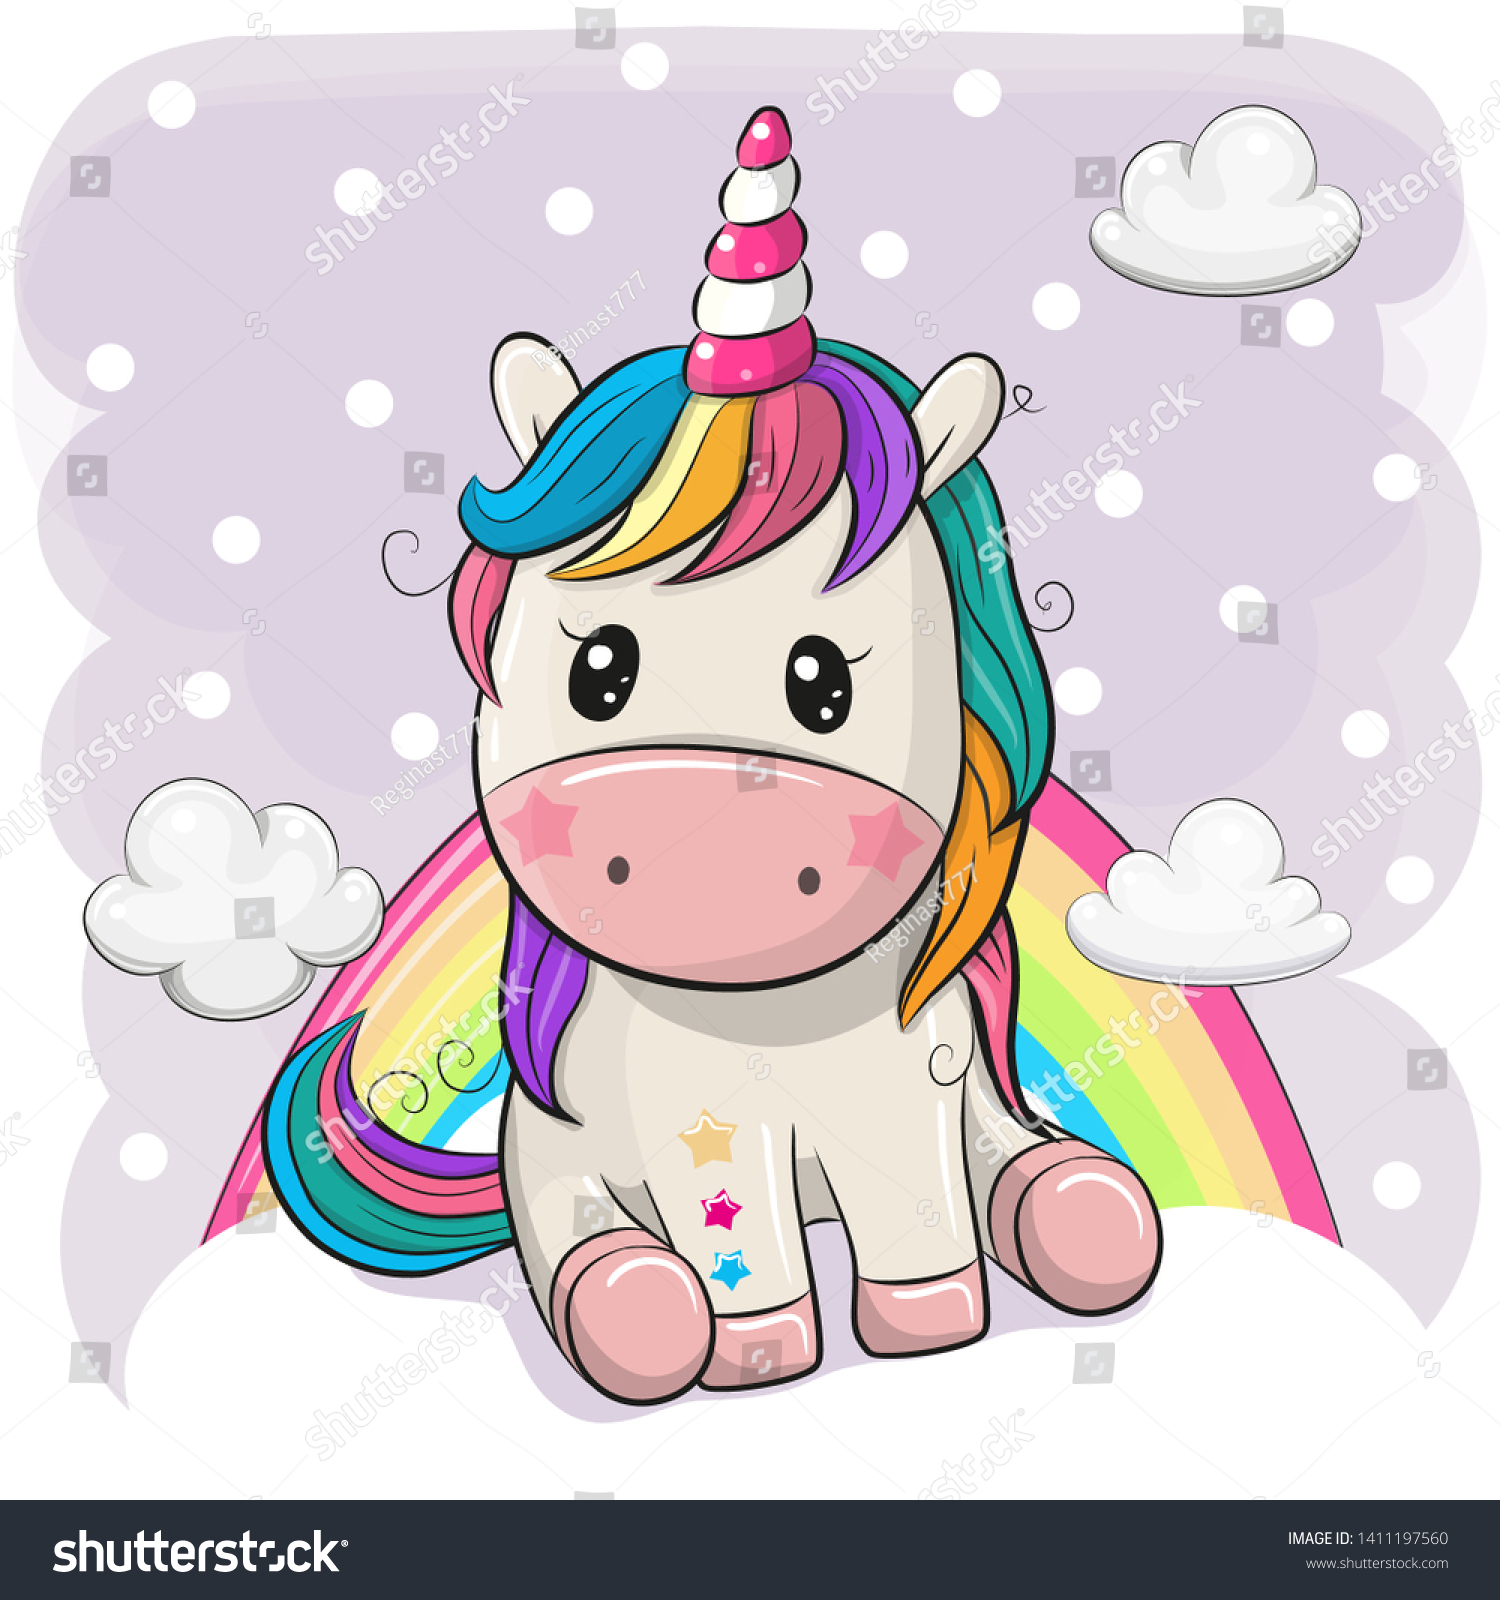 Cute Cartoon Unicorn Sitting On Clouds Stock Vector Royalty Free ...